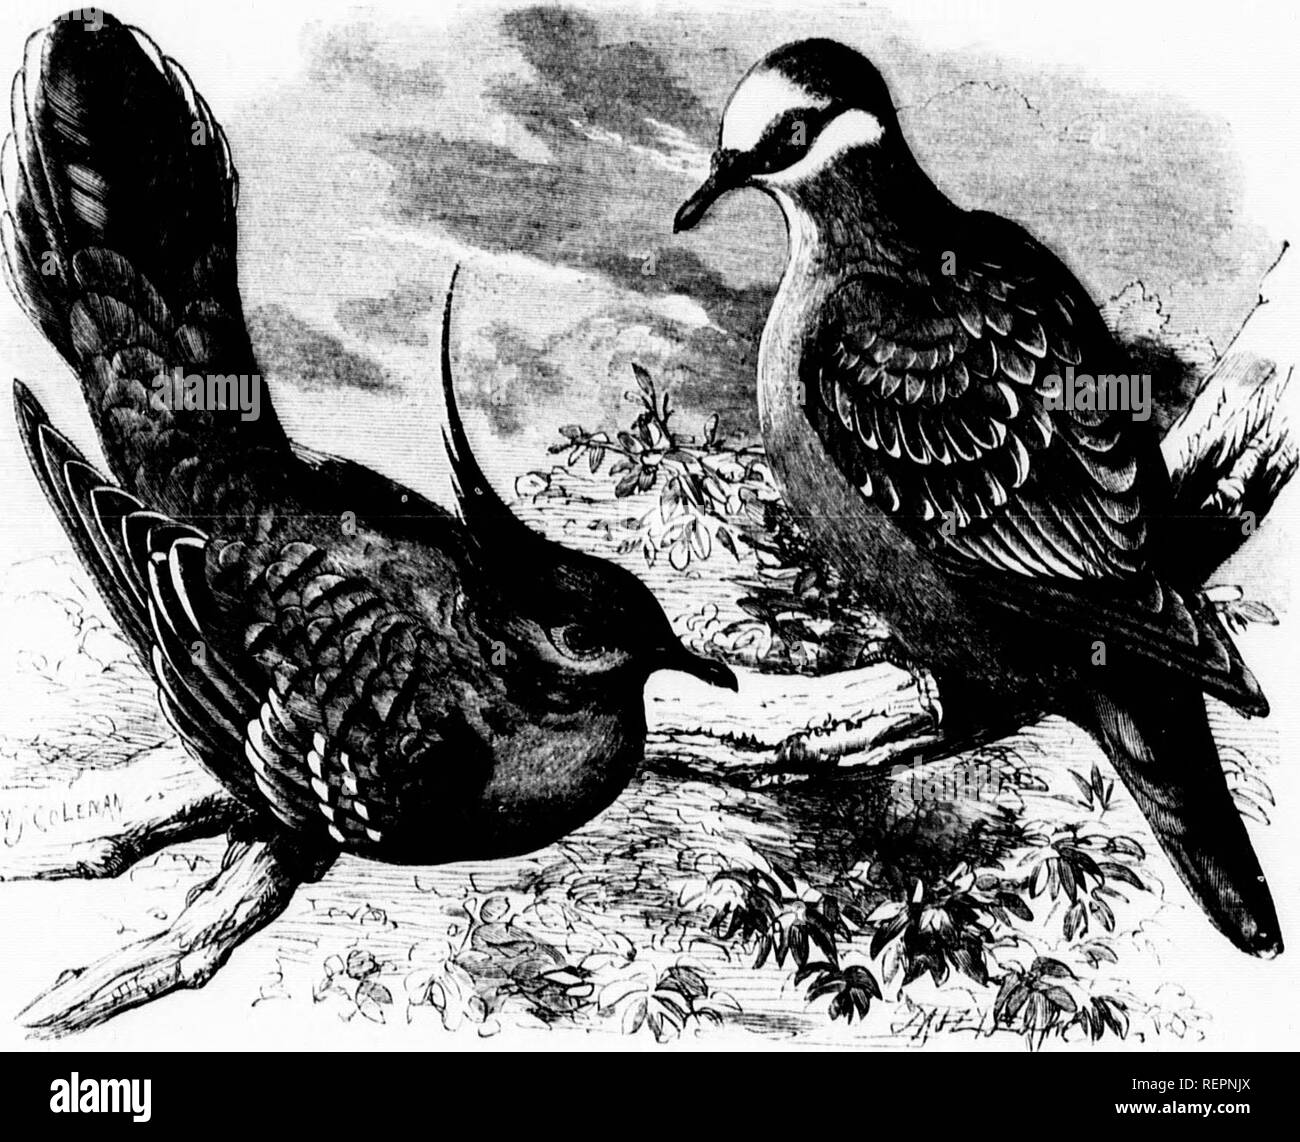 . The illustrated natural history [microform]. Birds; Natural history; Oiseaux; Sciences naturelles. ii rusty liuo. Tho tail. I'lfKSl'MI) I'KHOO.V.â'(),-iâ./(fr;.s hphi'.trs. BRONZKWING PKii:ON'. r/m,,.s- vln,h::,,ln;,. Iwit iif till' dMV, hut at sundown, ,.n tlu- .â ontrary, it arrive! with aiT..w-liko swiftness fitlior .sMi,iiiy or in pairs. iwn.-j., It. di.l iH,l .h.s,.,.ii,l at -m.v fâ f h,. ..lov ..r the in,âl, hut (hishcil .luwn to tlio m'oun.l at about t.Mi yanls distaiir.; ivniain.Ml ,,uirt for a sliort tin,.., tlin. wall '&quot;&quot;' ' '&quot;''^' &quot;'' tl'^',Â«&gt;'rrounding oou Stock Photo